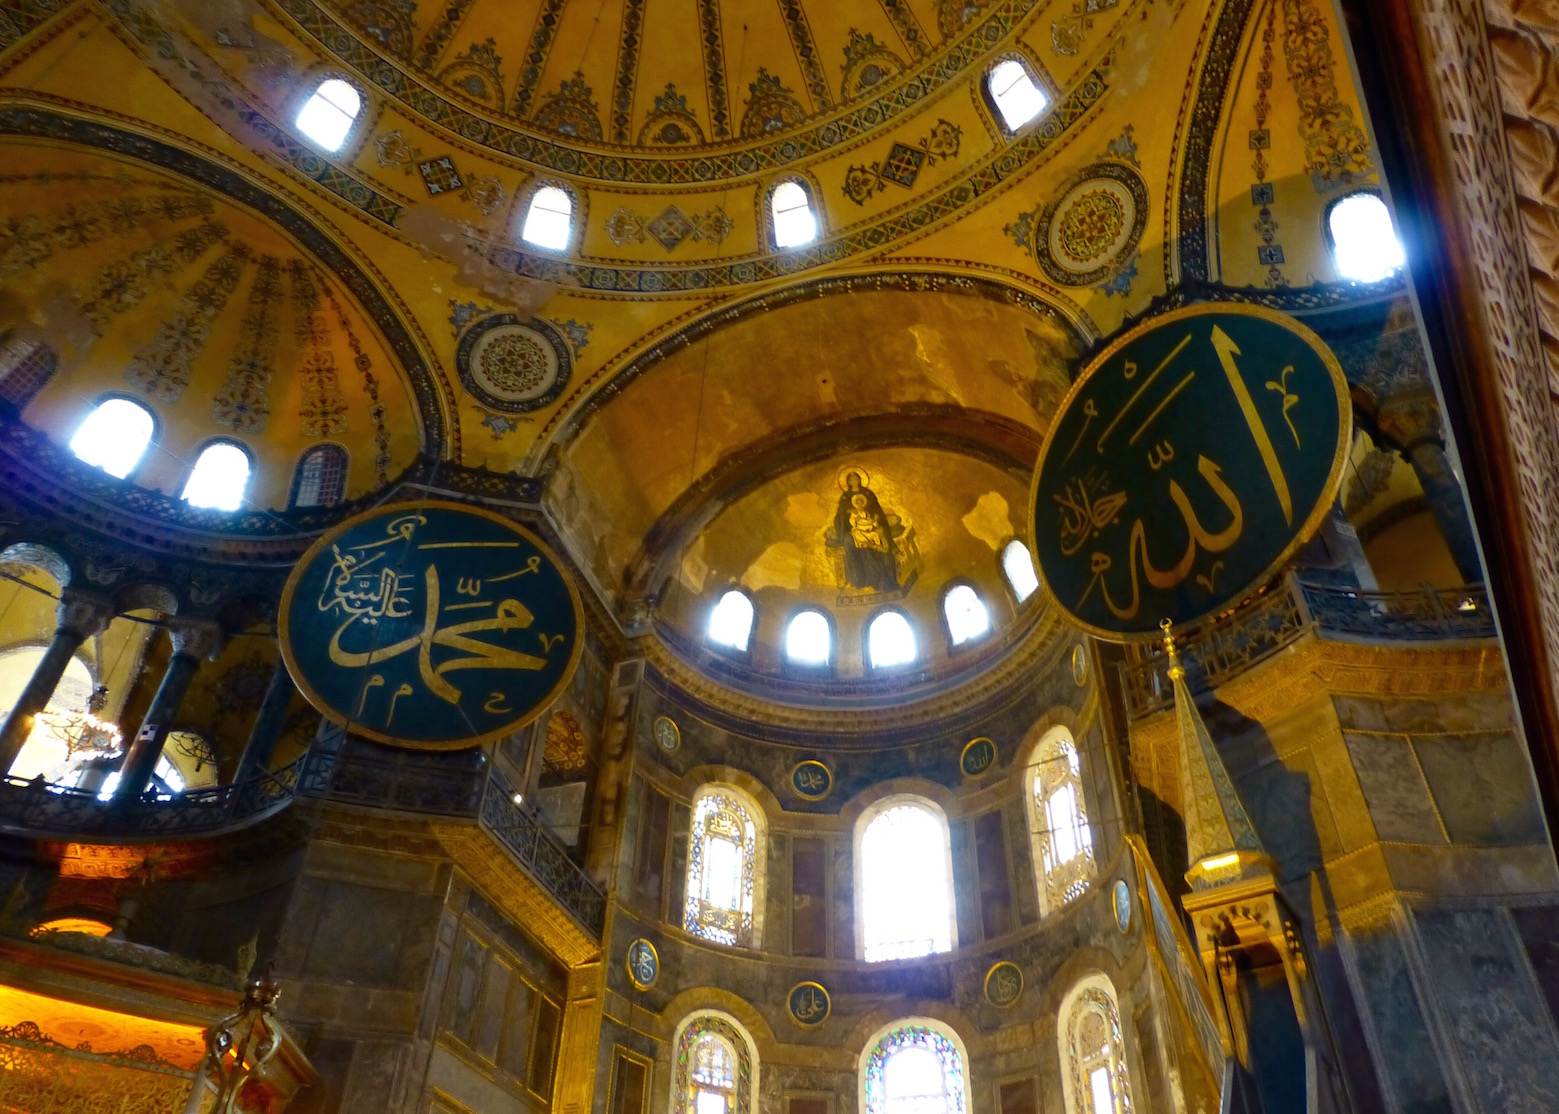 10. Hagia Sophia